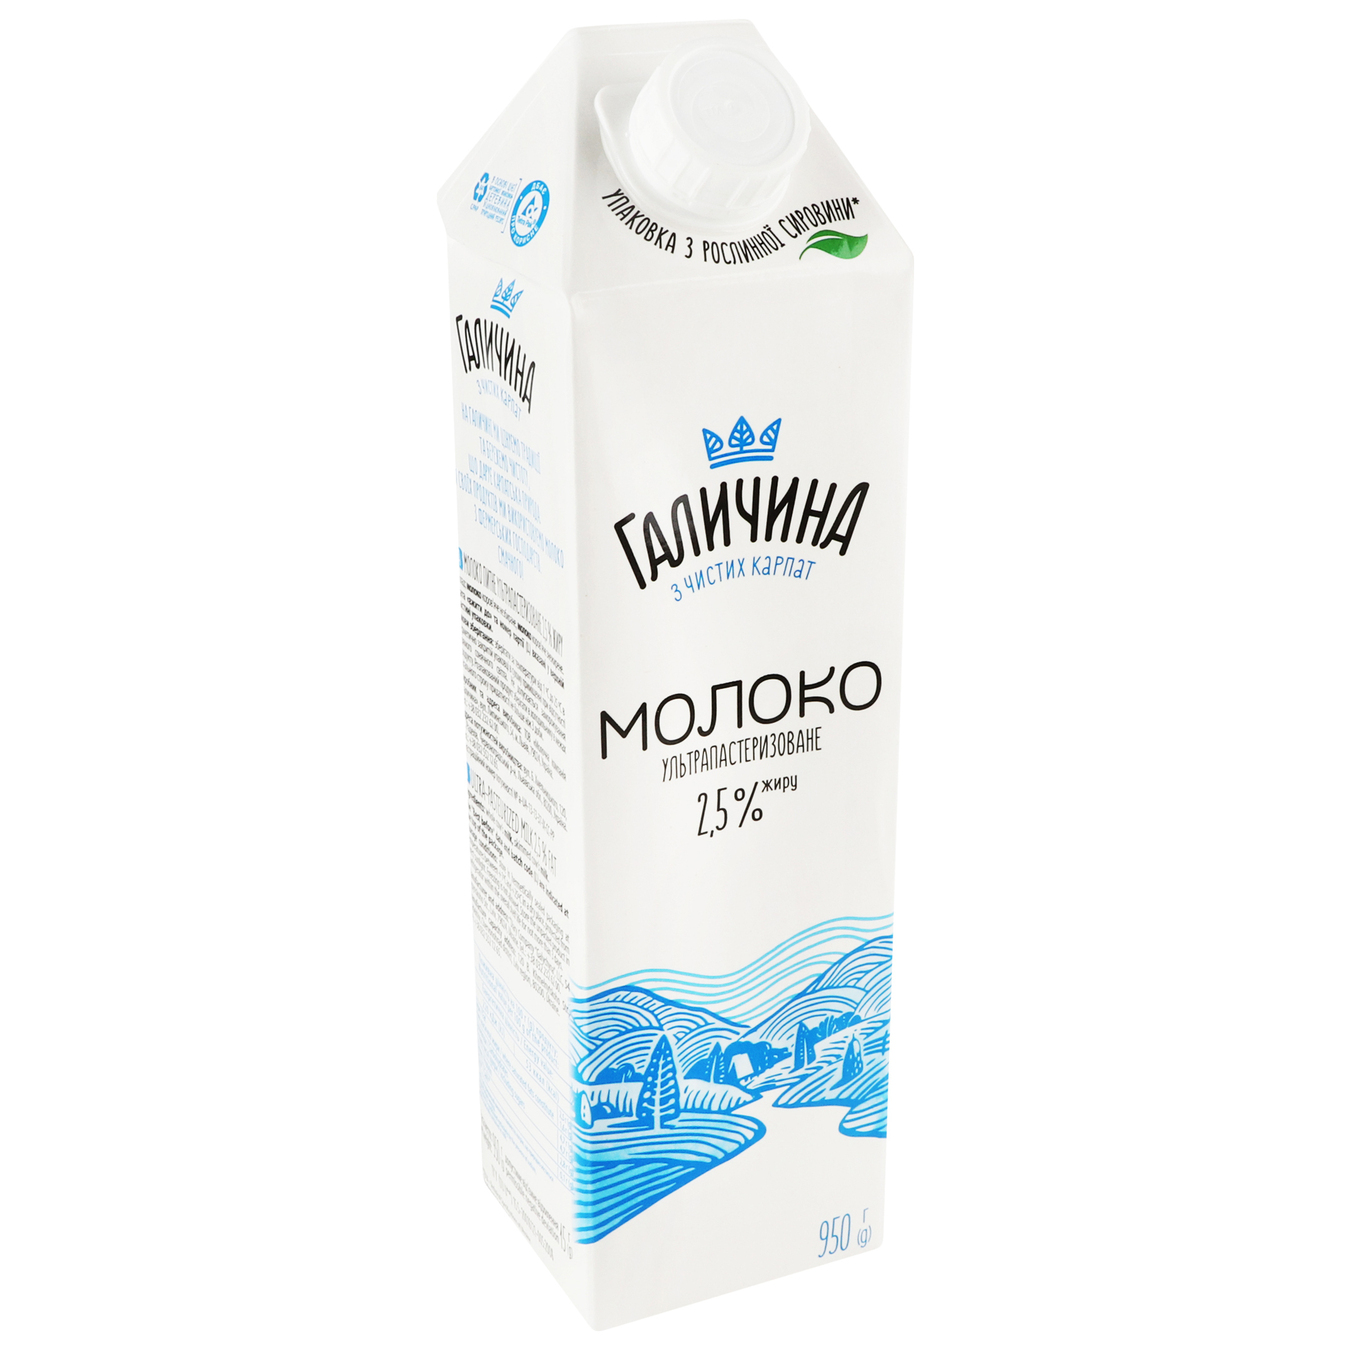 Galychyna Ultrapasteurized Milk 2,5% 950ml 4